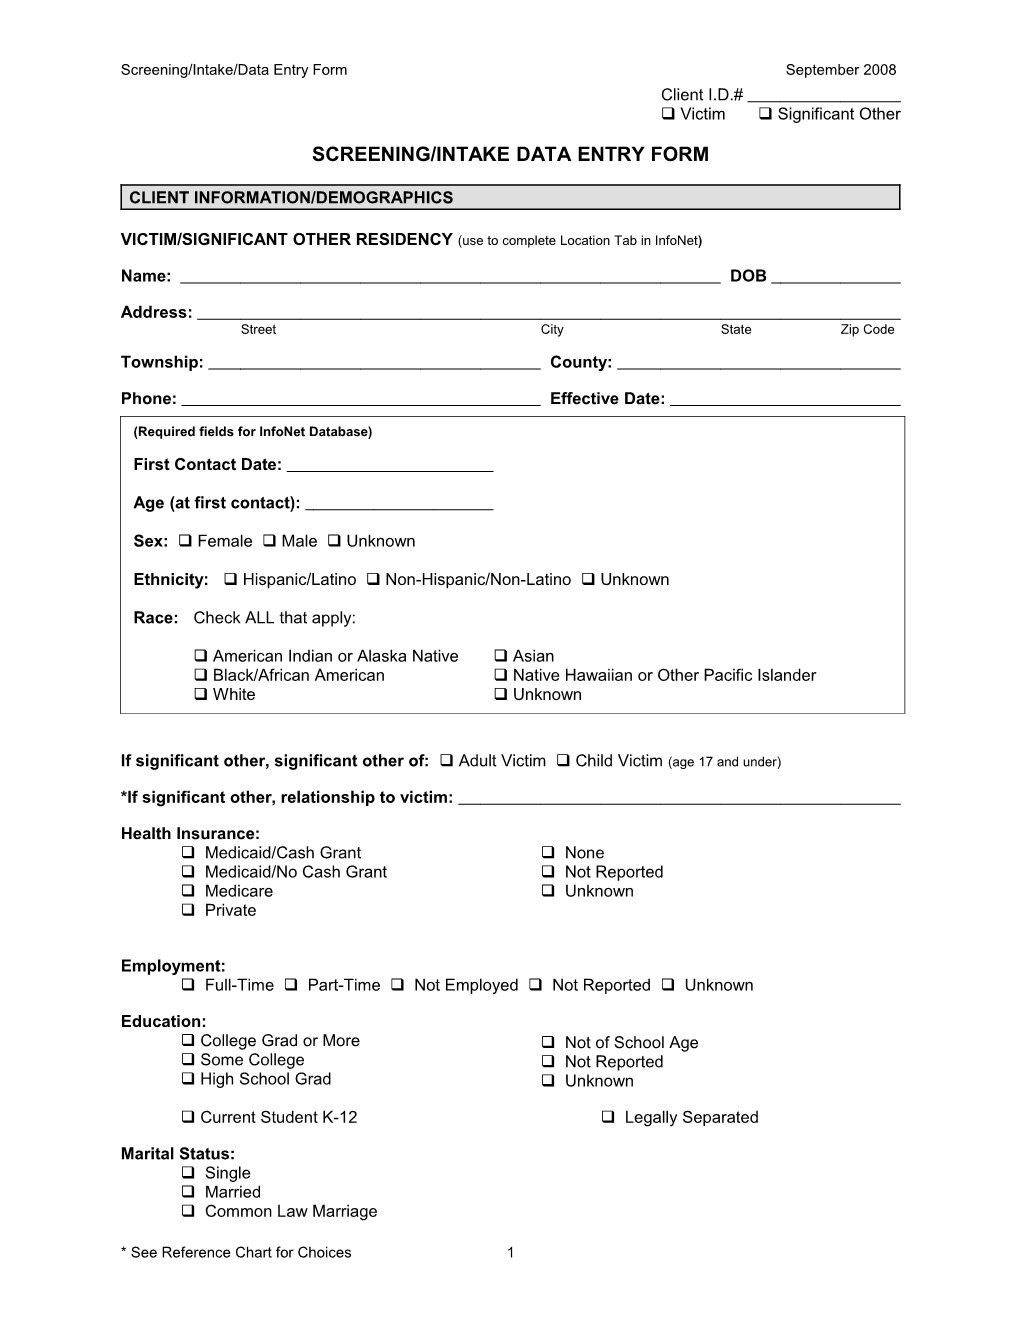 Screening/Intake Data Entry Form